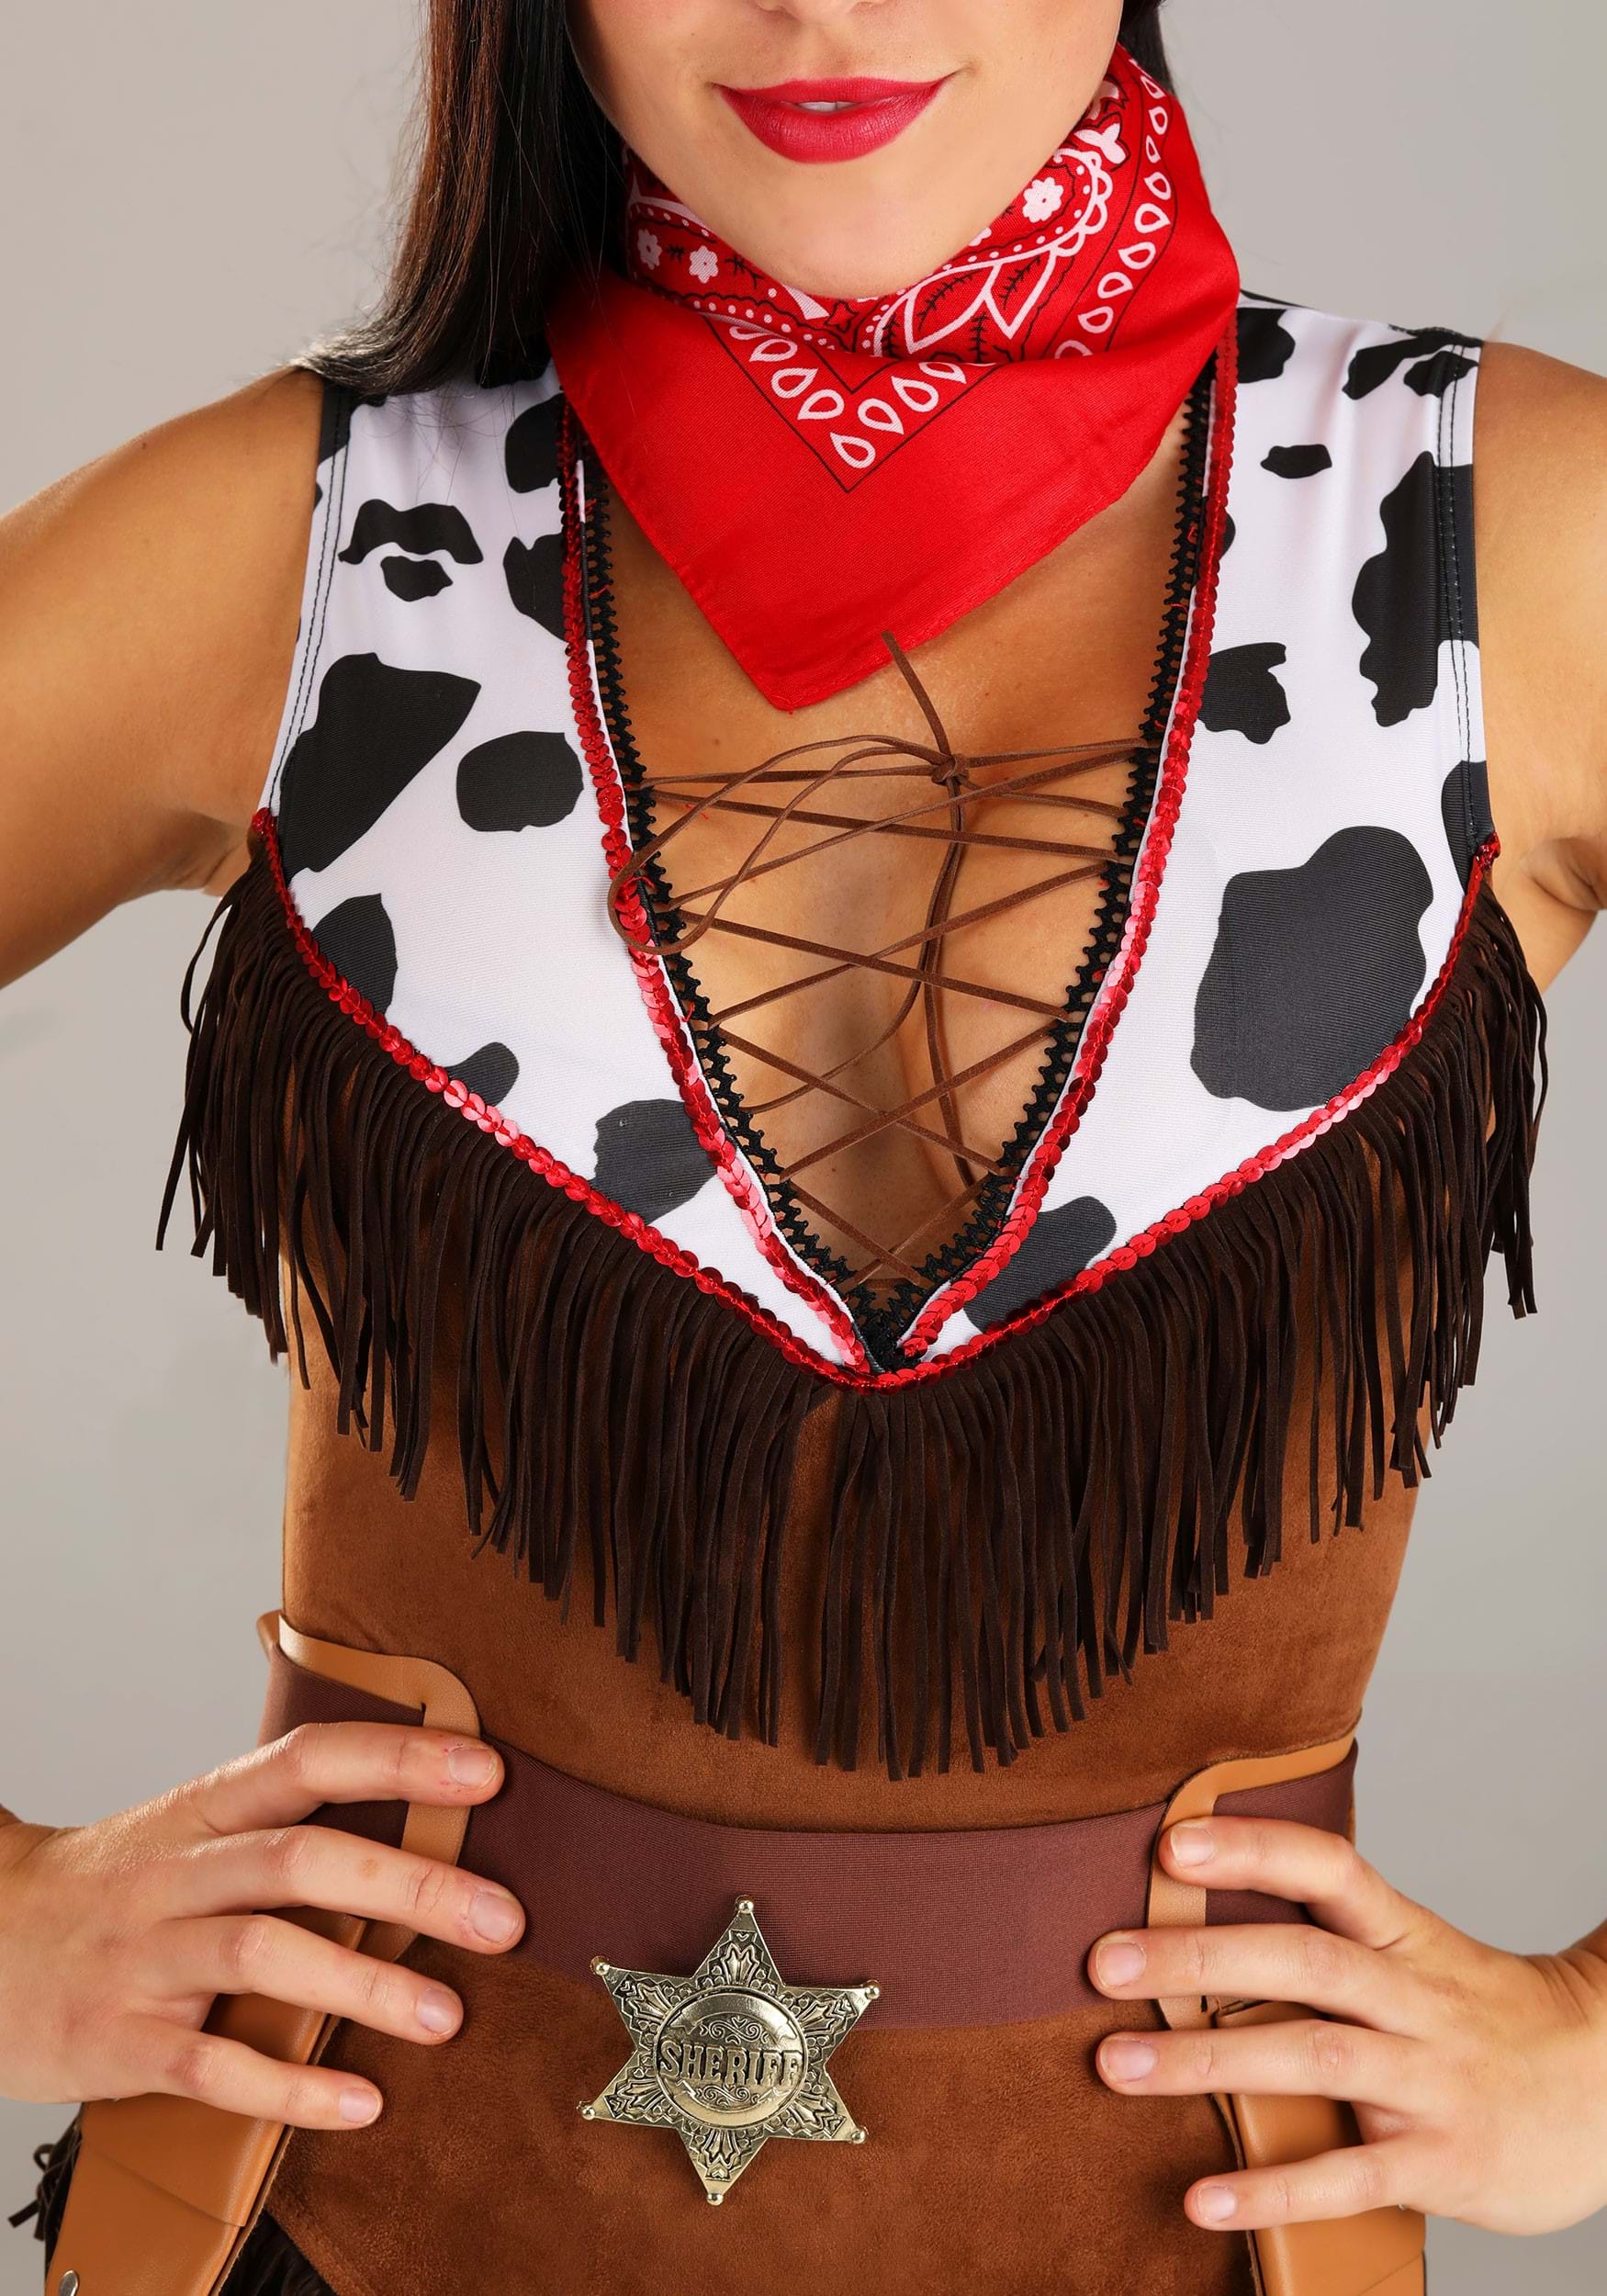 Plus Size Women's Wild West Hottie Costume